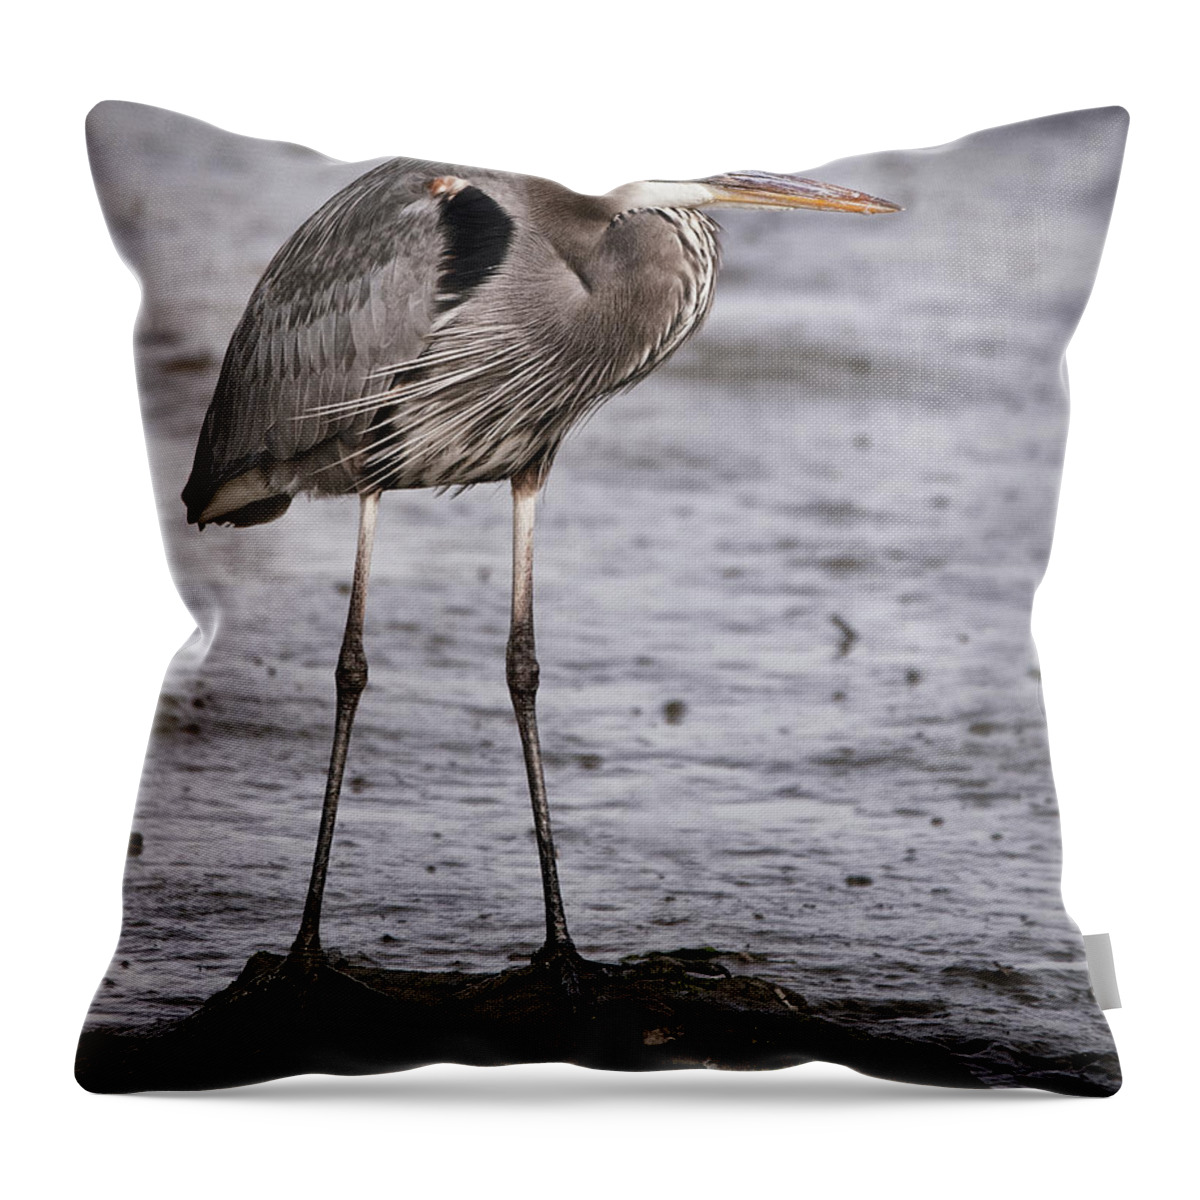 Blue Heron Throw Pillow featuring the photograph Blue Heron by Joe Granita